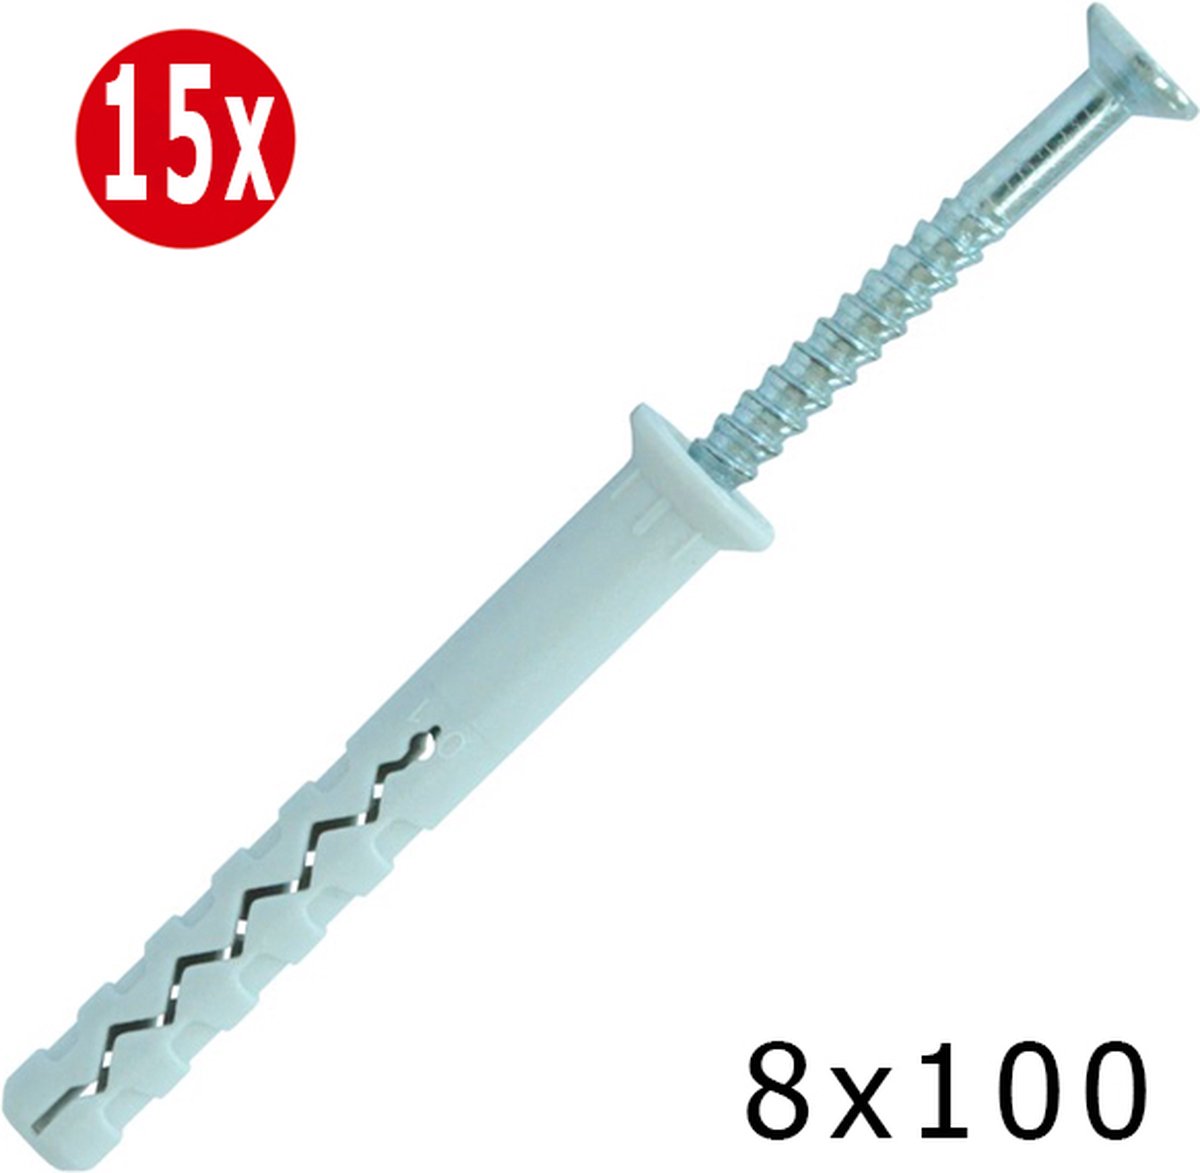 Tornitrex® slagplug 8x100 (15x)